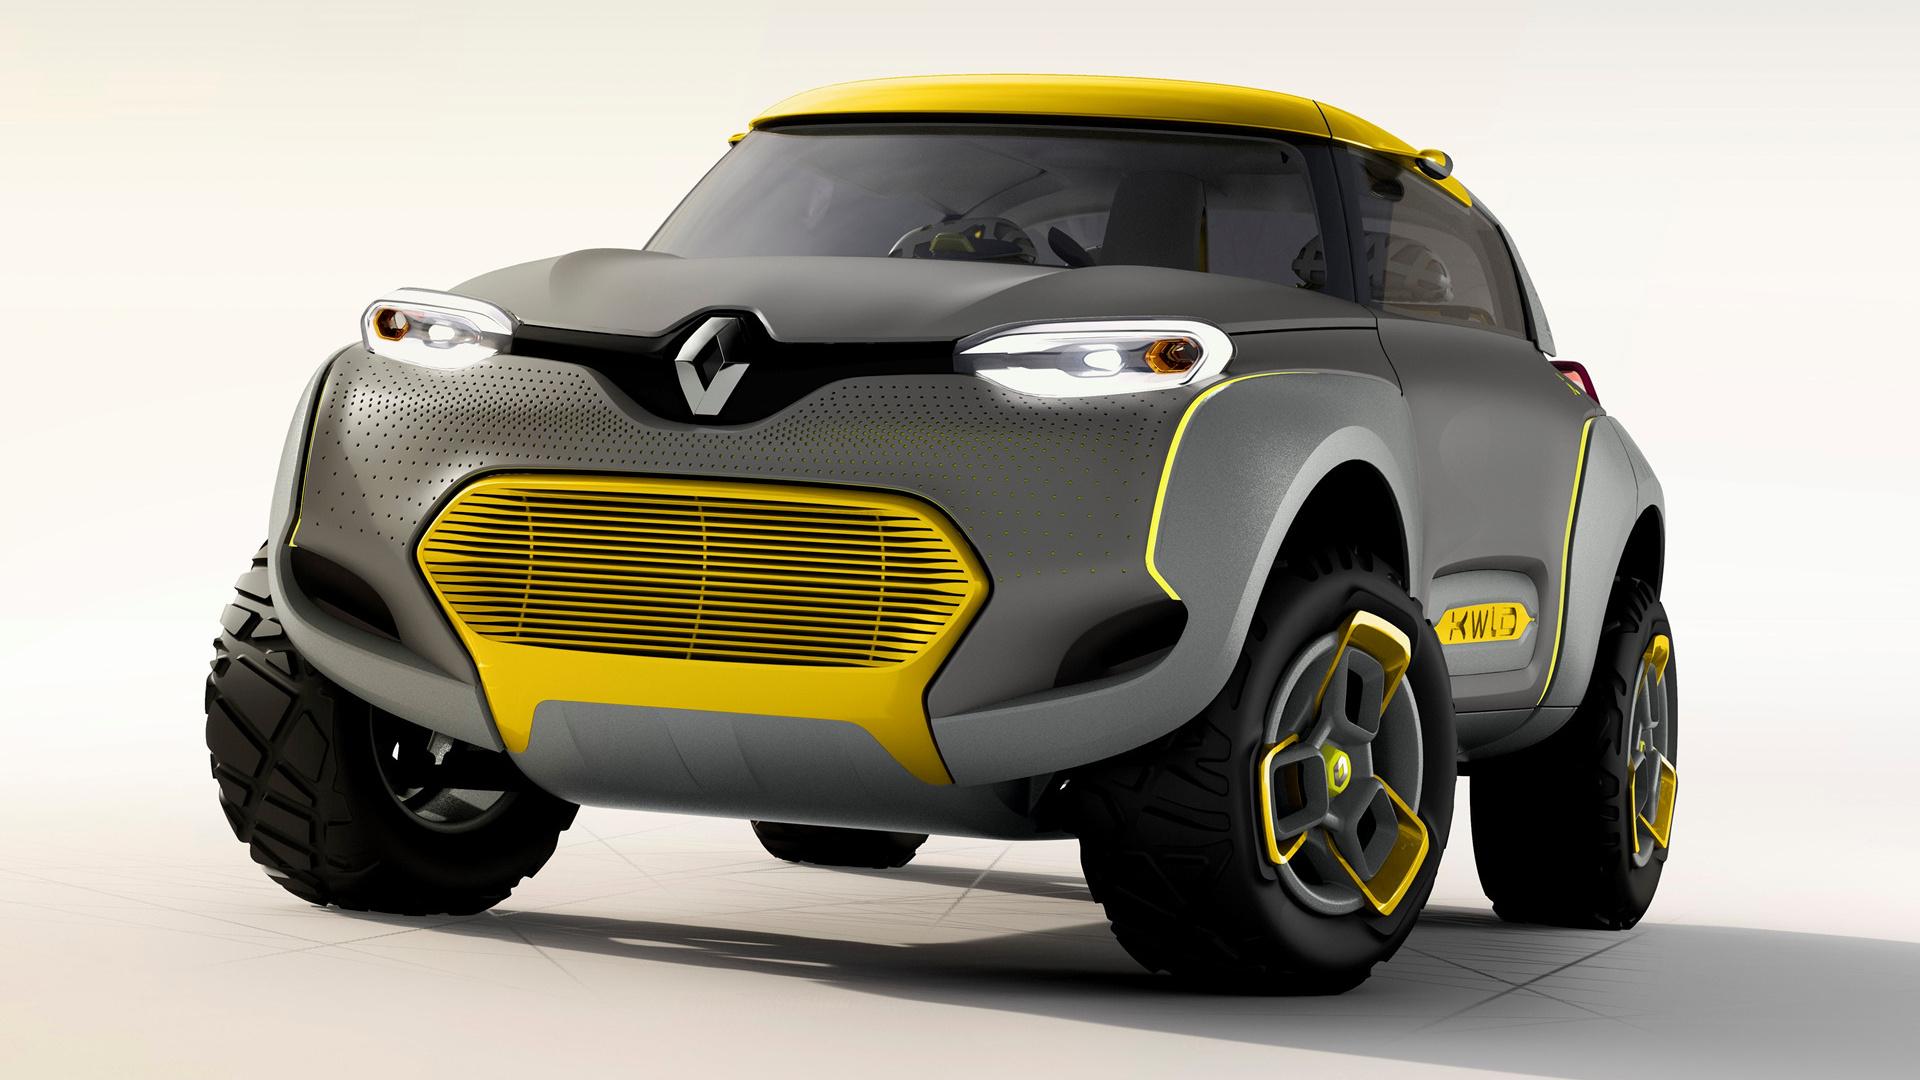 Renault KWID Concept and HD Image